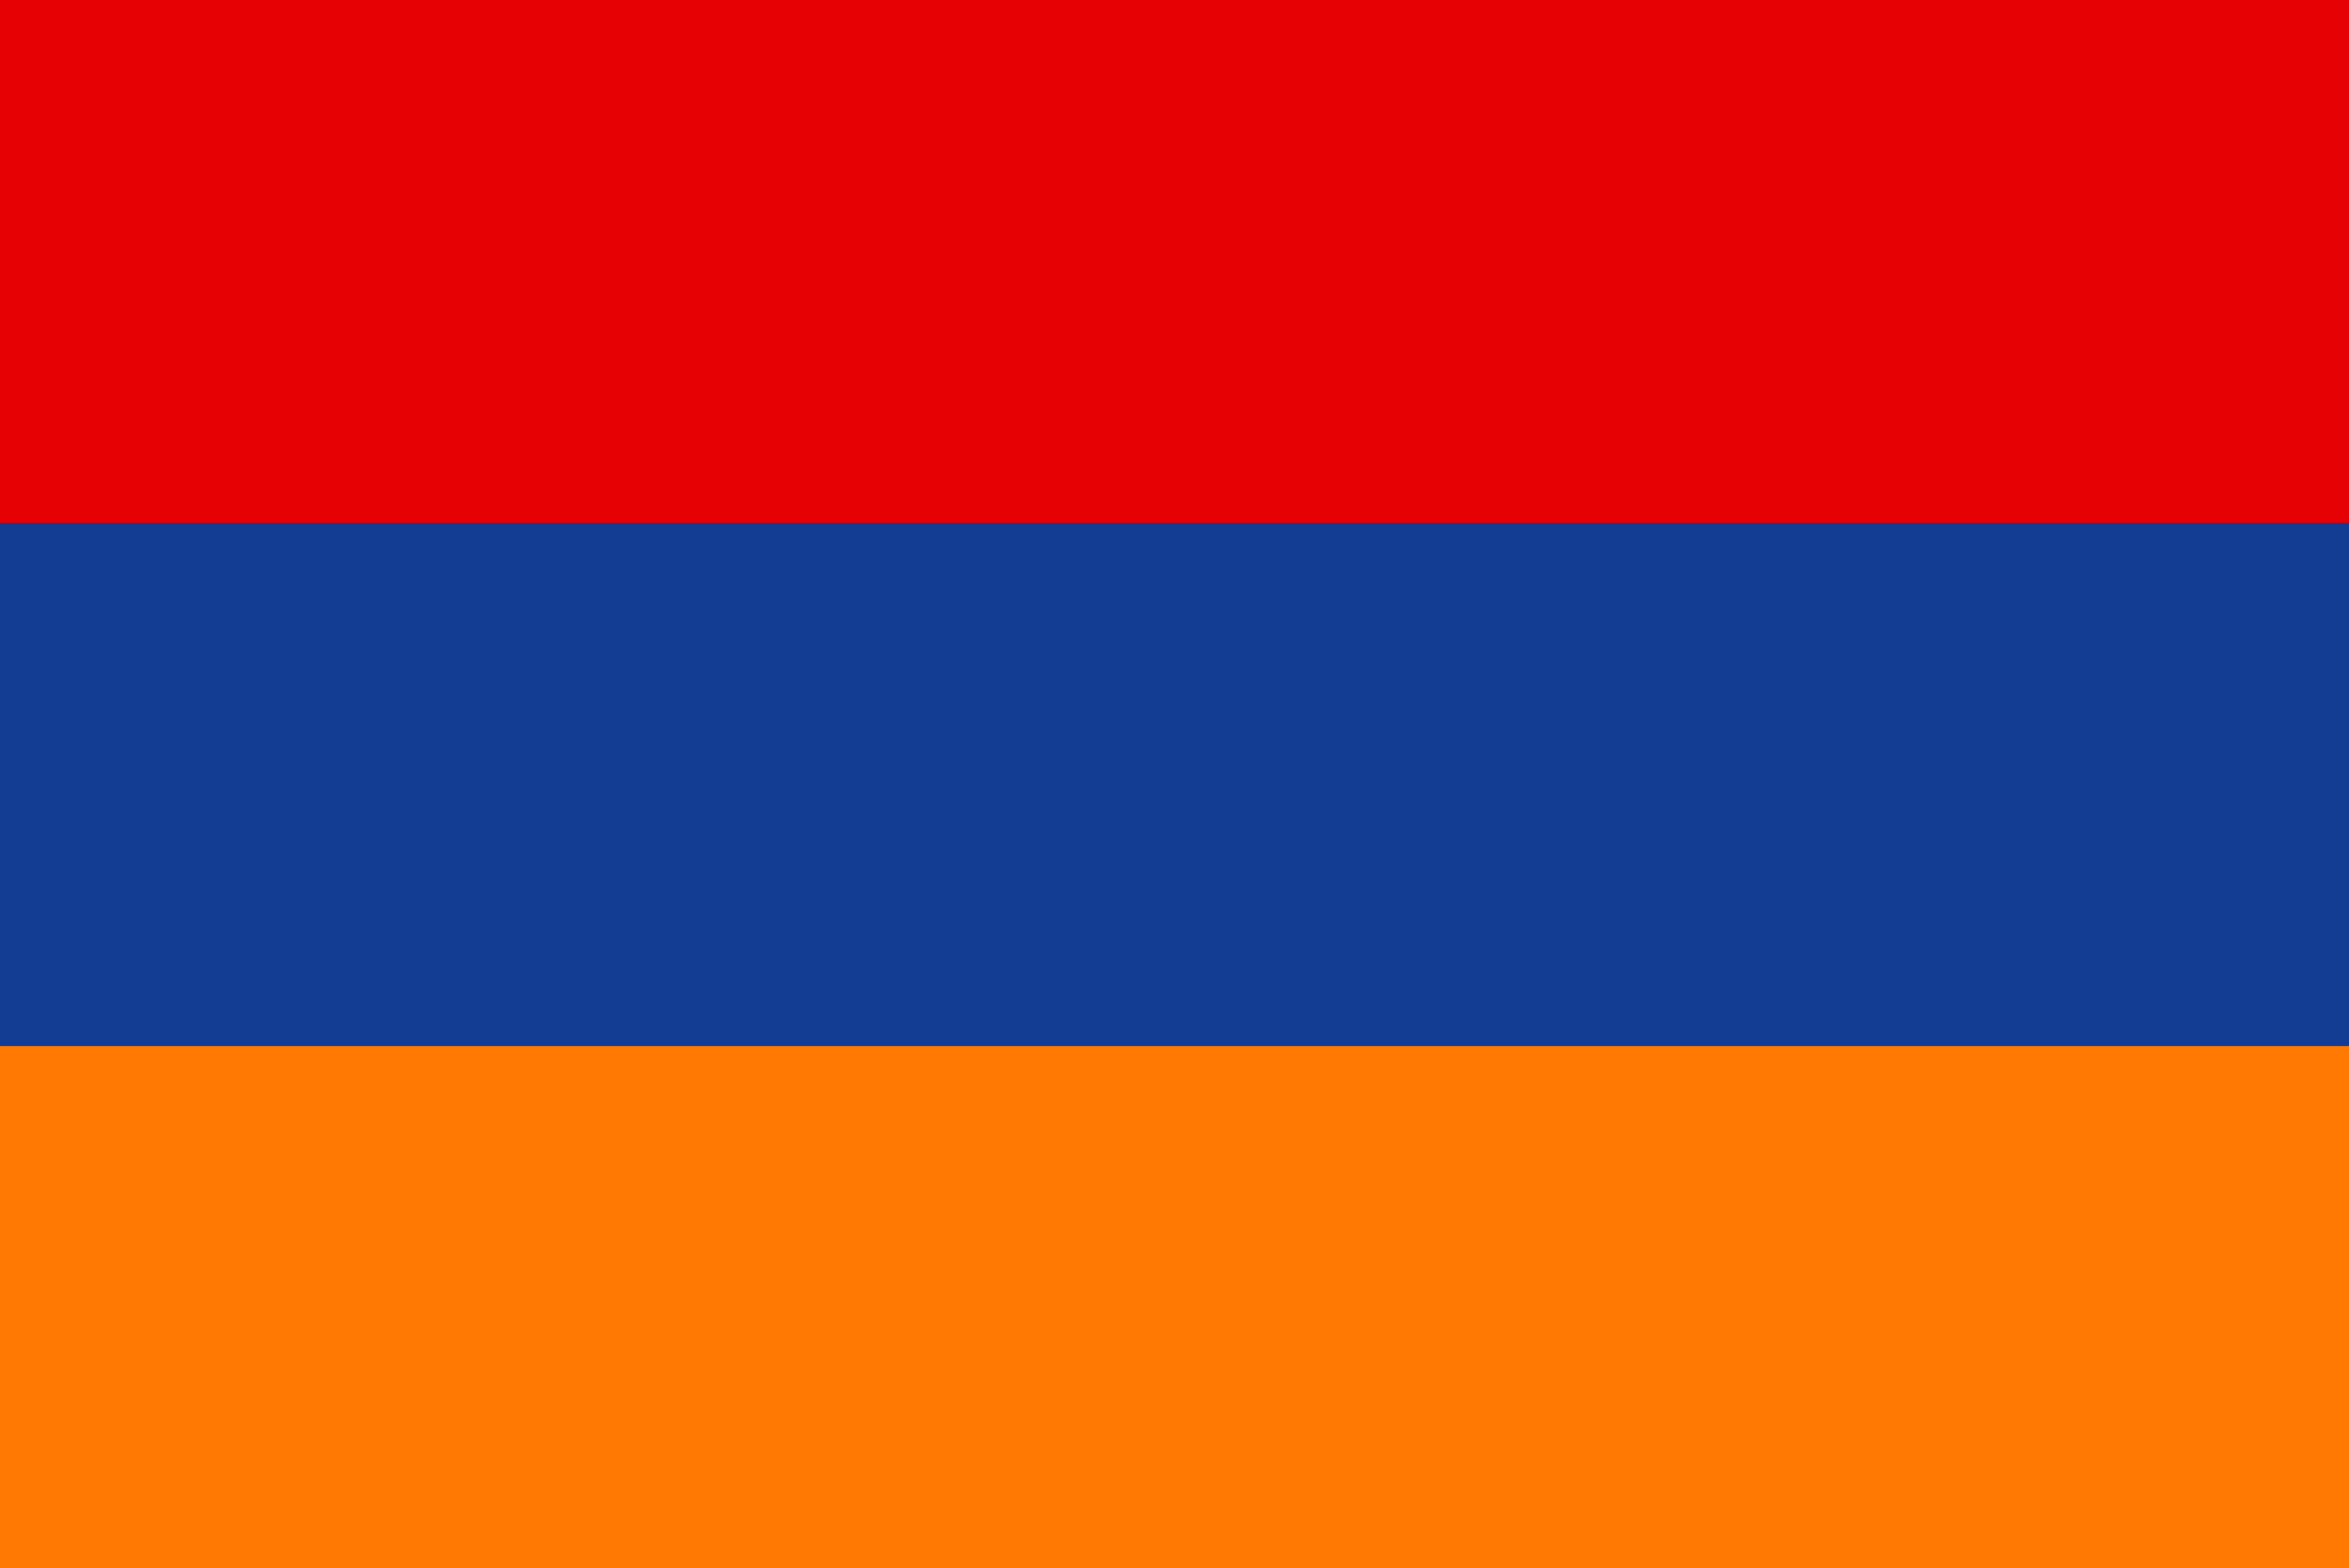 When Did Armenia Gain Independence? - WorldAtlas